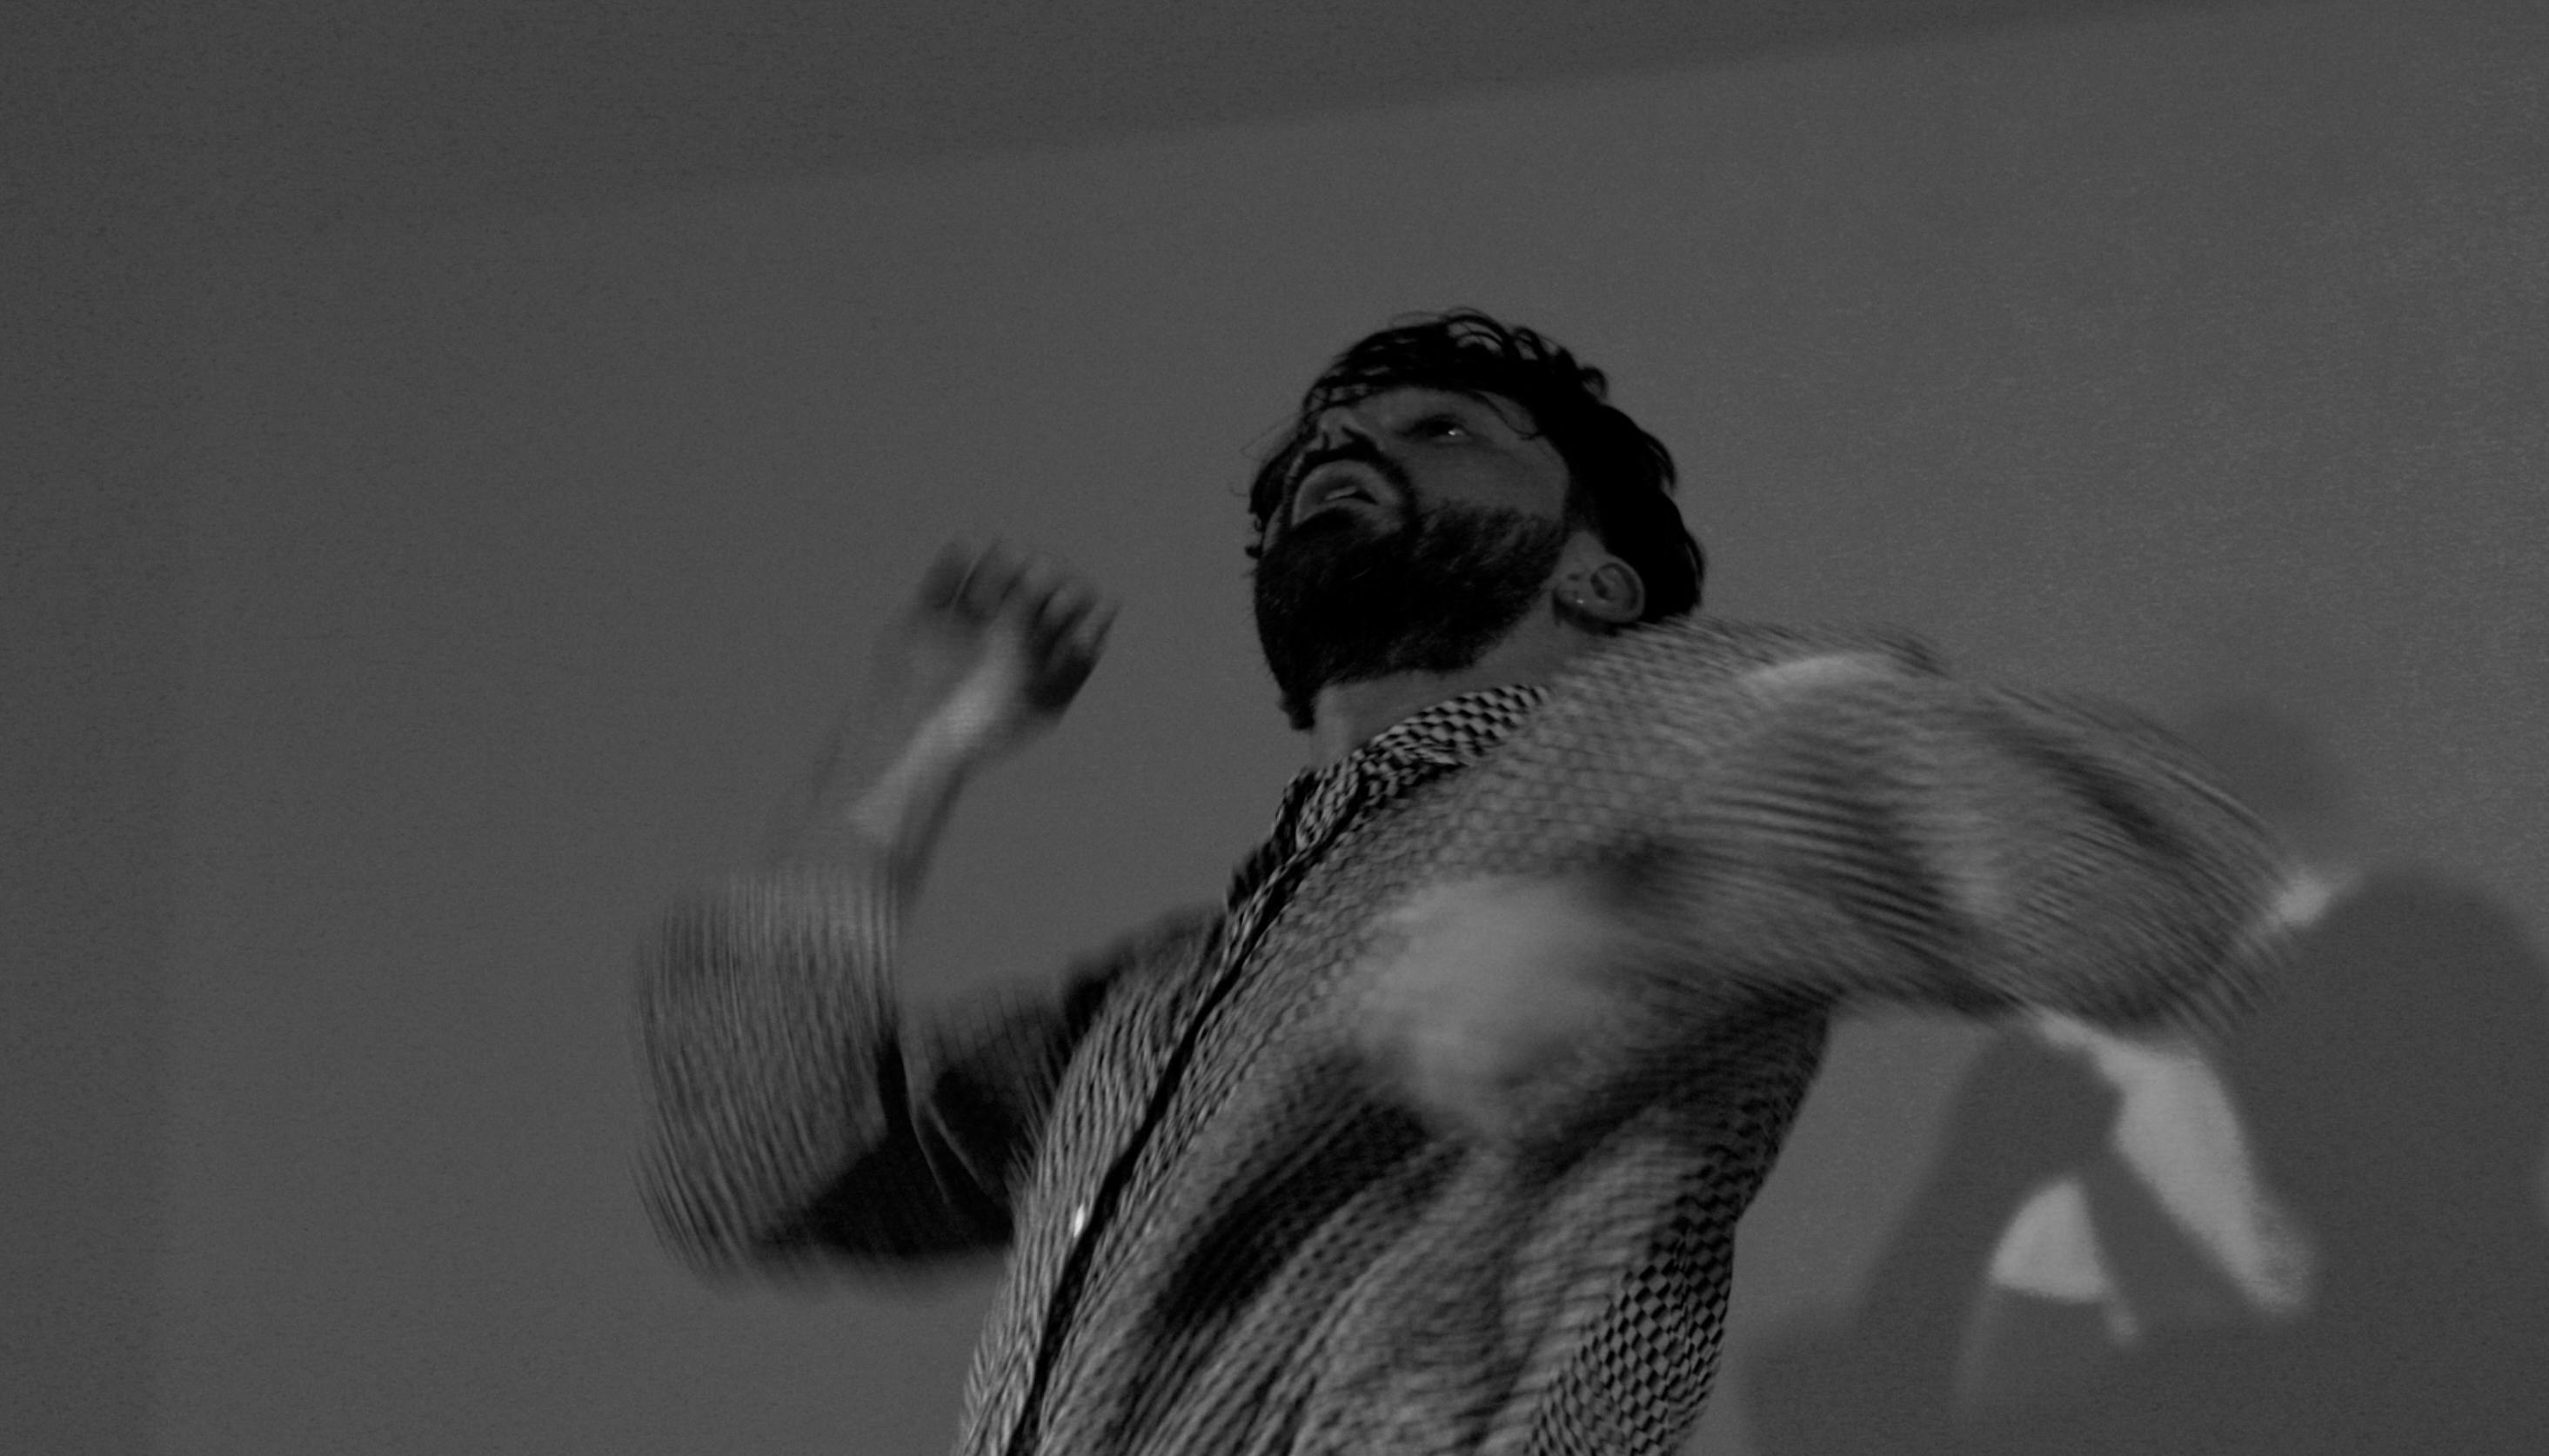 Simone Donati in a blurred black-and-white photo moves his arms